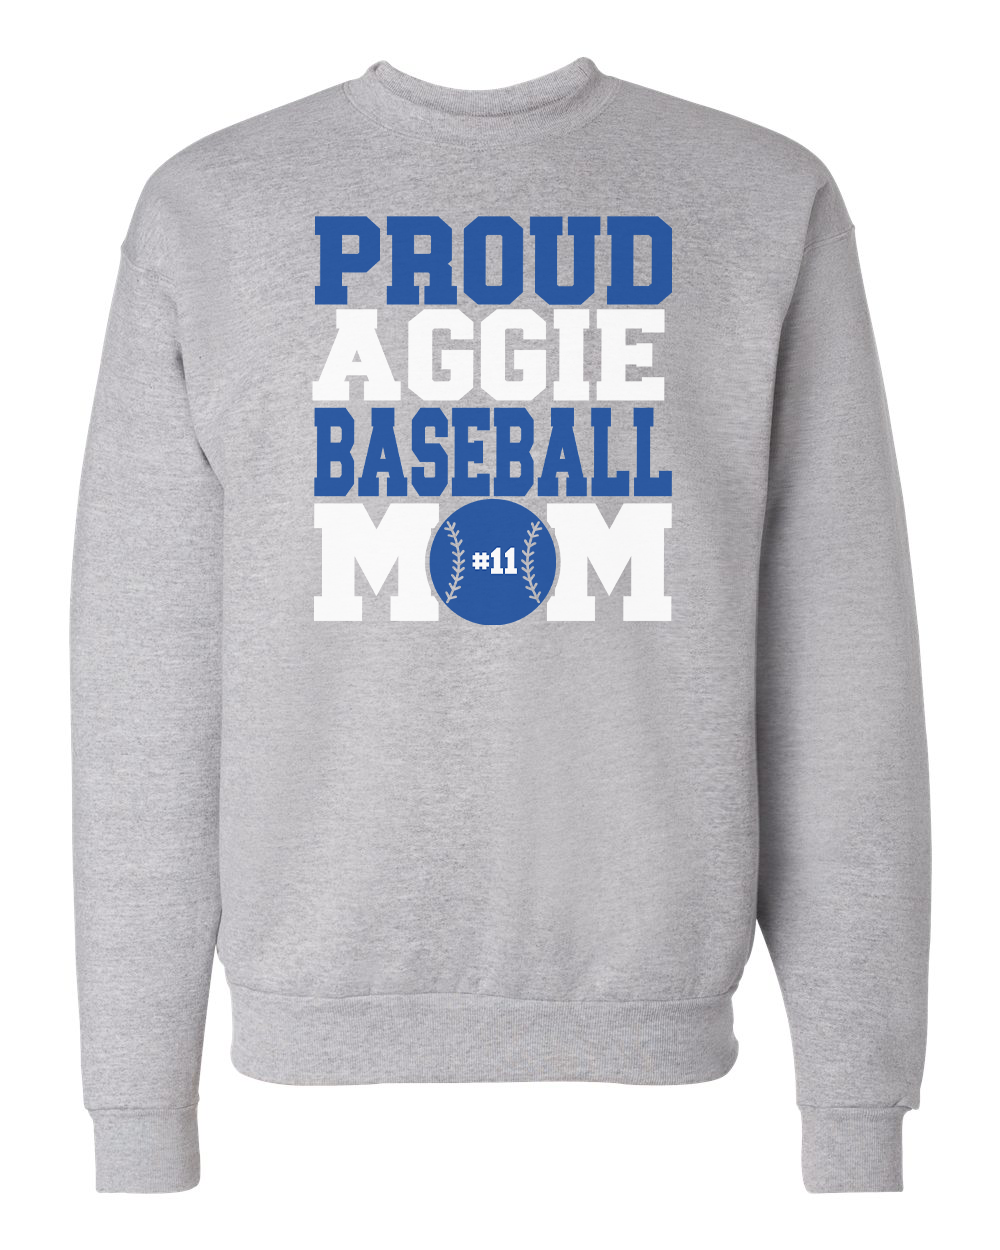 Proud Aggie Baseball Mom